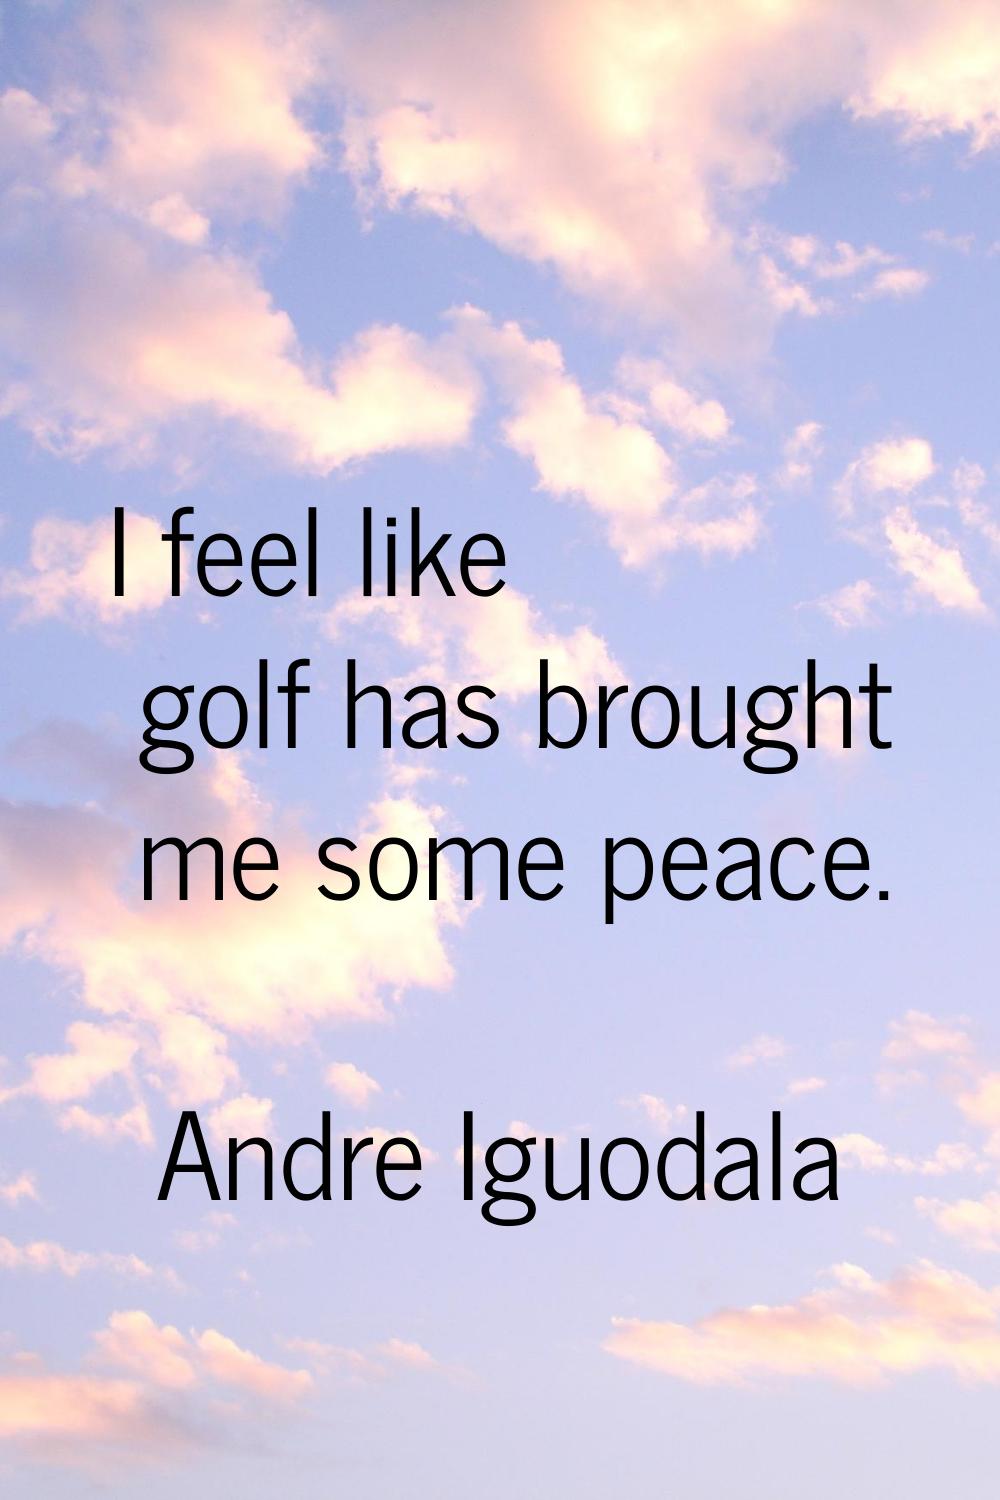 I feel like golf has brought me some peace.